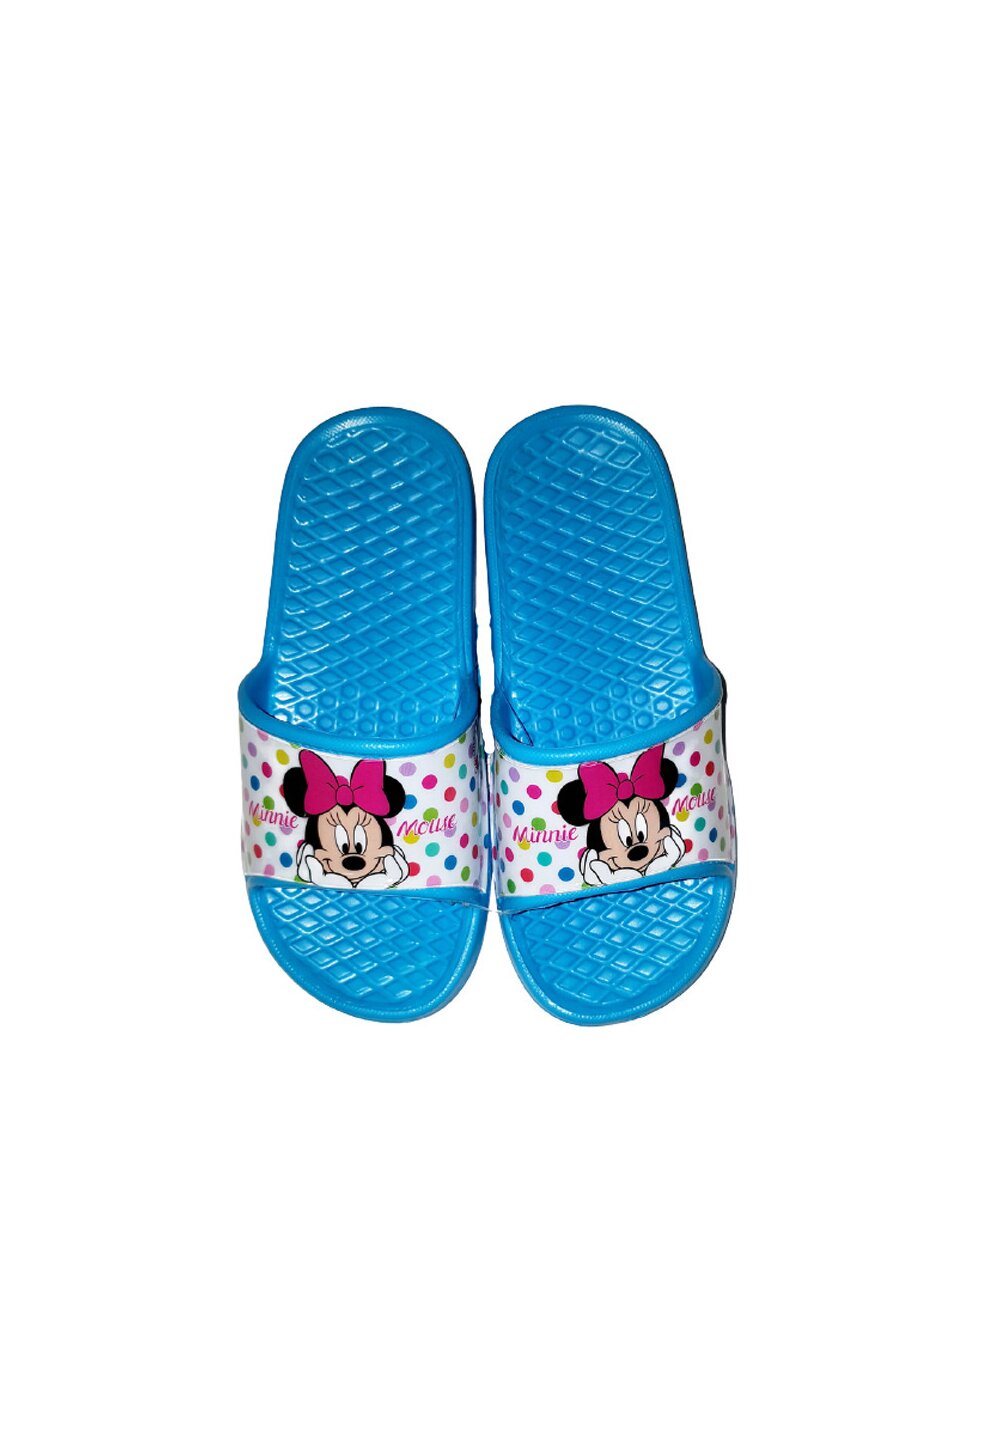 Papuci, Minnie Mouse, albastri cu buline DISNEY